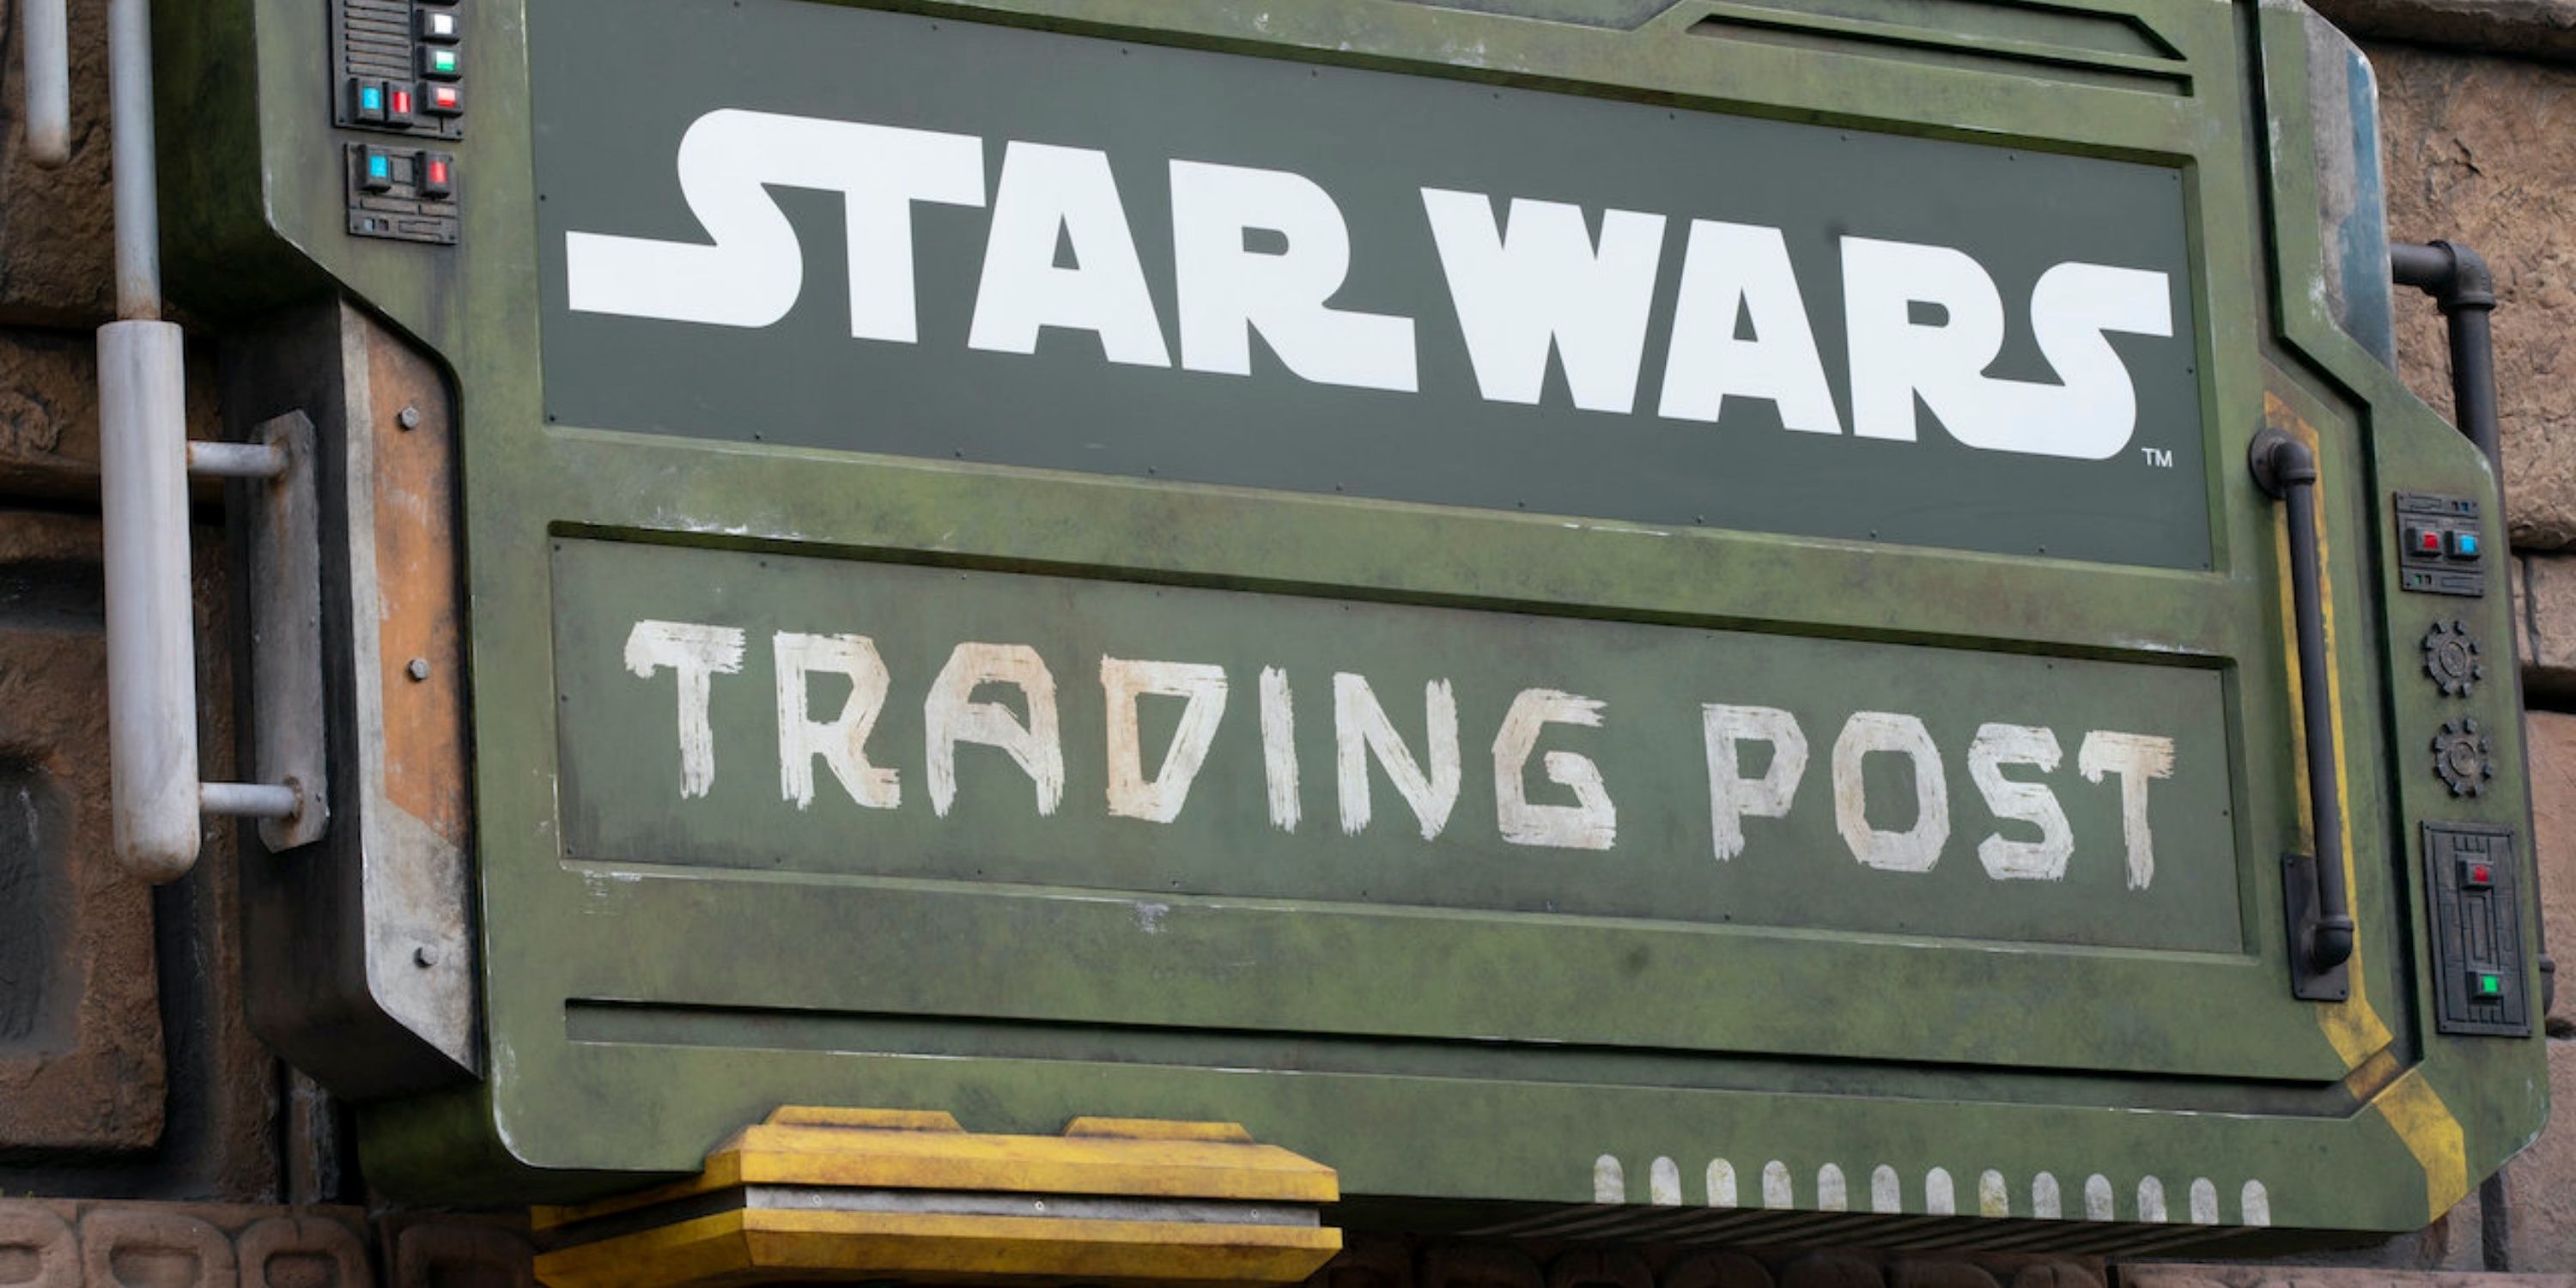 The Star Wars Trading Post logo